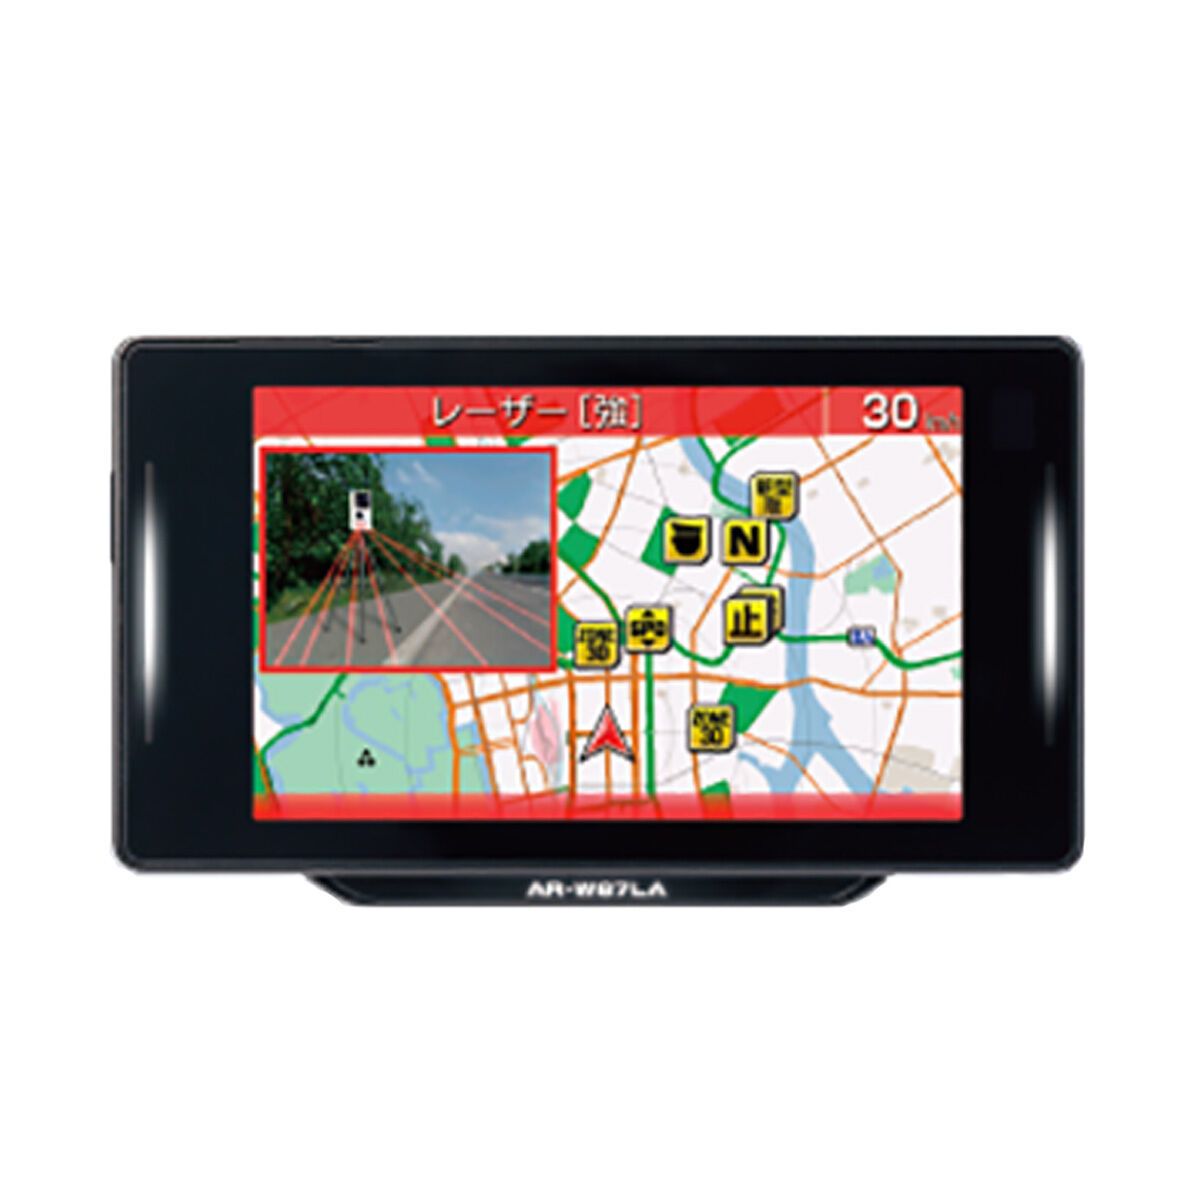 Cellstar　セルスター　ASSURA　AR-W87LA　GPSレーダー | オートバックス楽天市場店